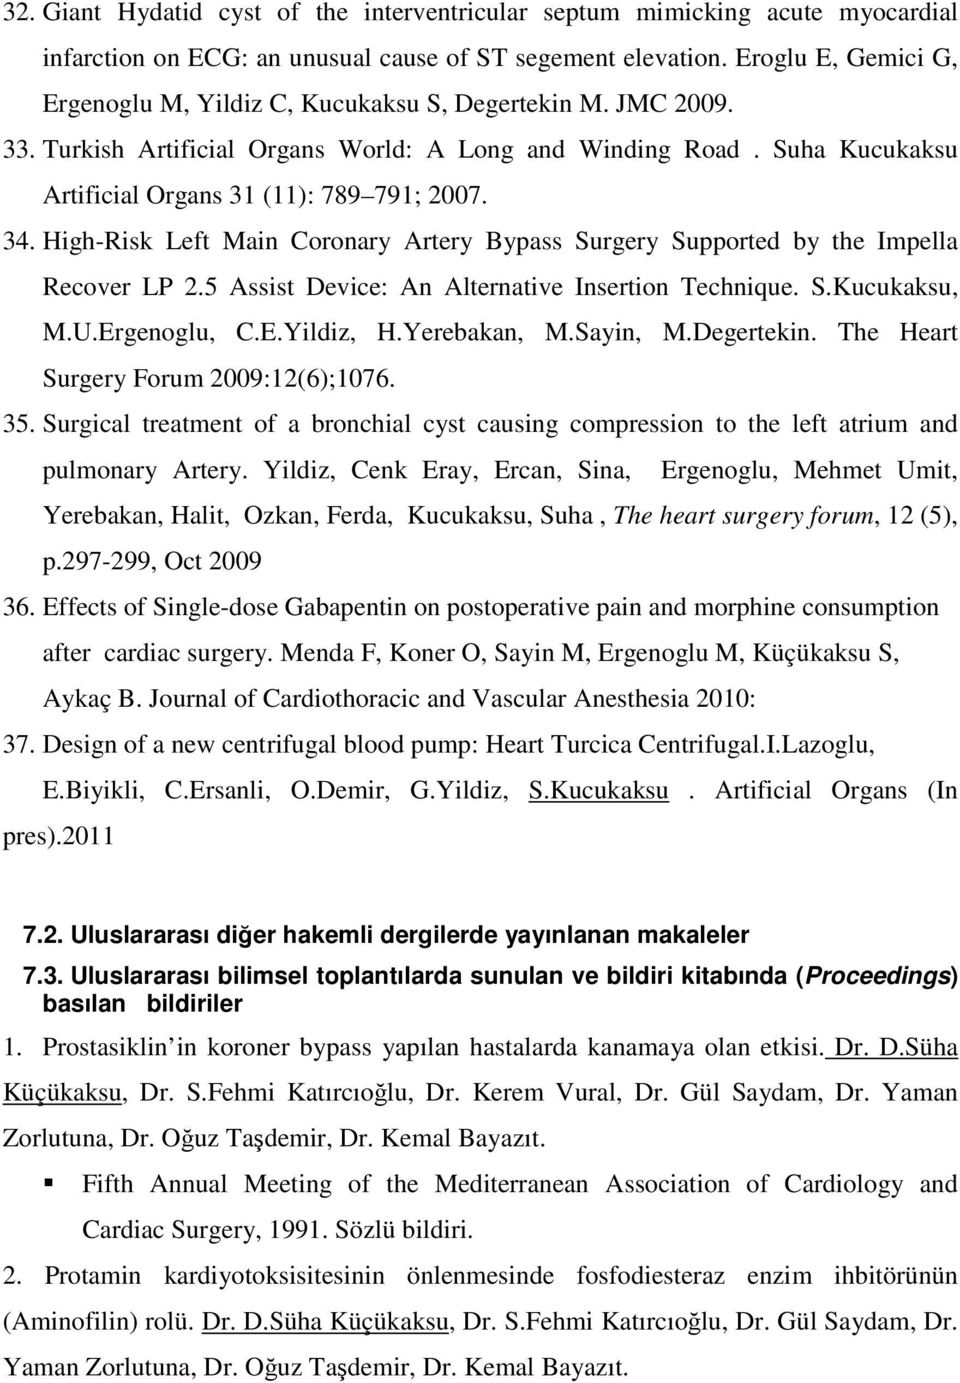 34. High-Risk Left Main Coronary Artery Bypass Surgery Supported by the Impella Recover LP 2.5 Assist Device: An Alternative Insertion Technique. S.Kucukaksu, M.U.Ergenoglu, C.E.Yildiz, H.